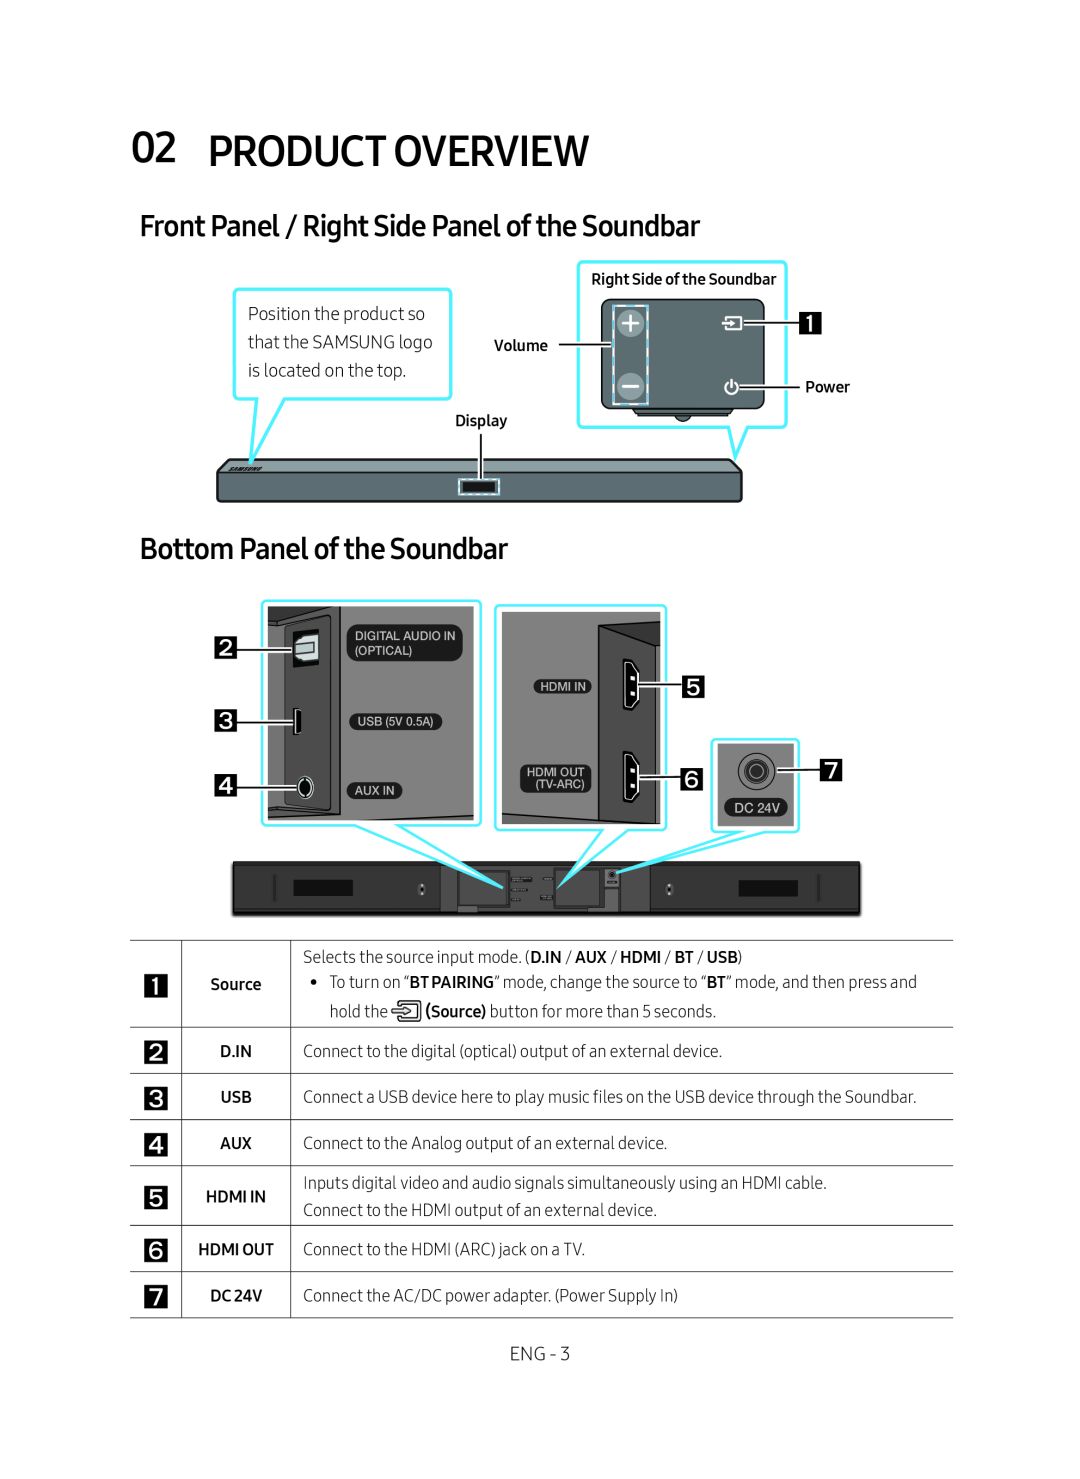 Front Panel / Right Side Panel of the Soundbar Standard HW-M450